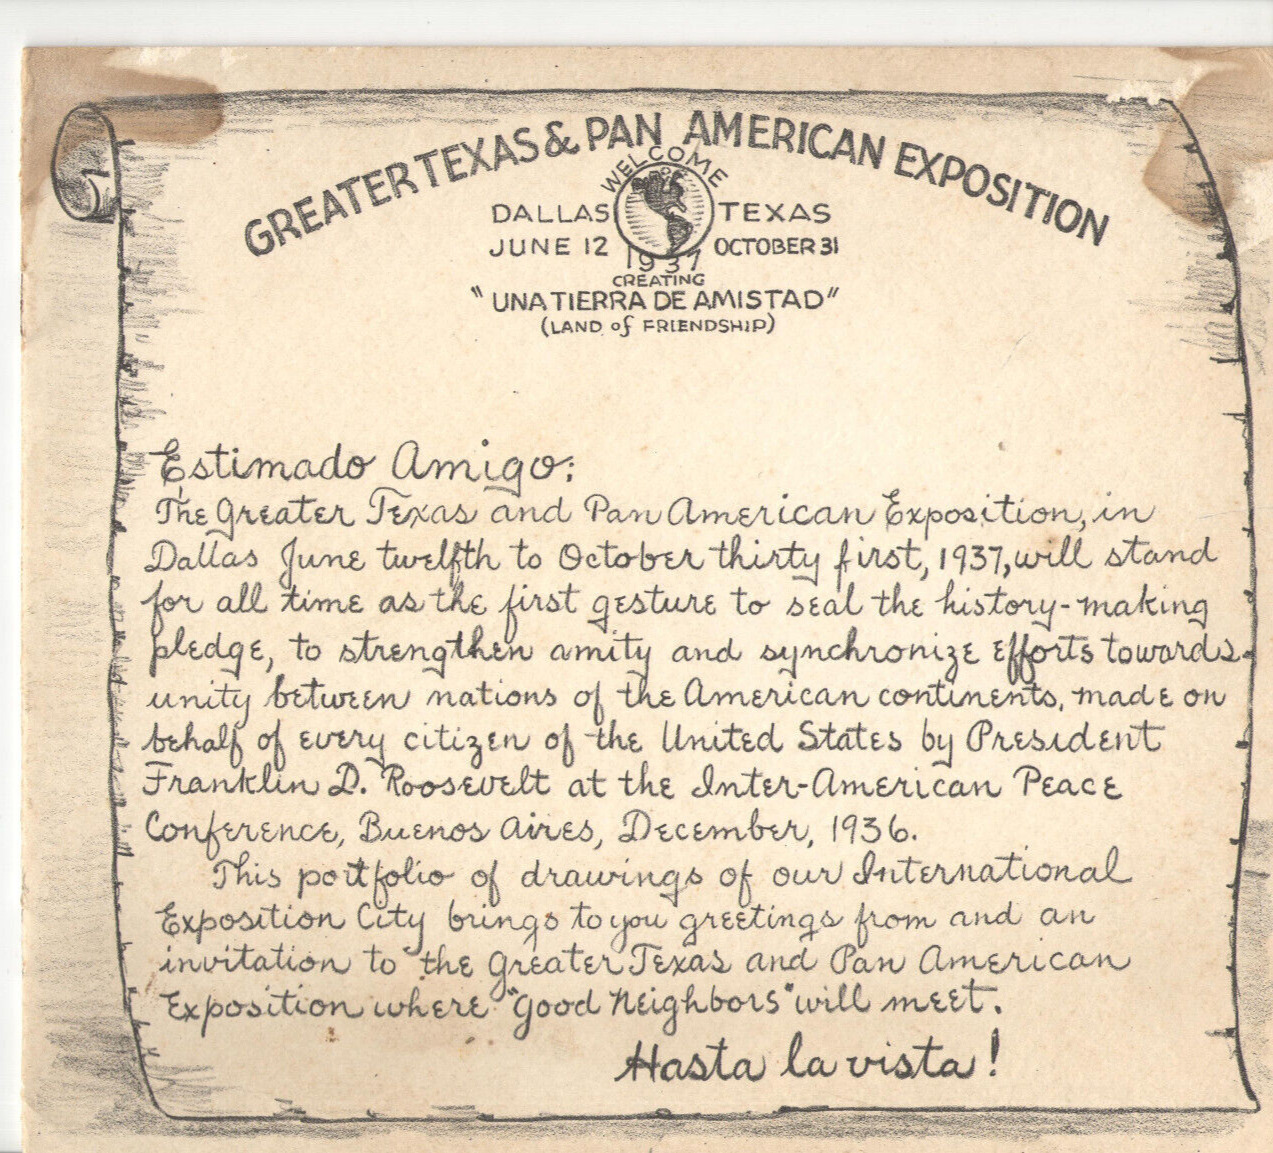 VTG 1937 GREATER TEXAS & PAN AMERICAN EXPOSITION, DALLAS, TX DRAWINGS PORTFOLIO